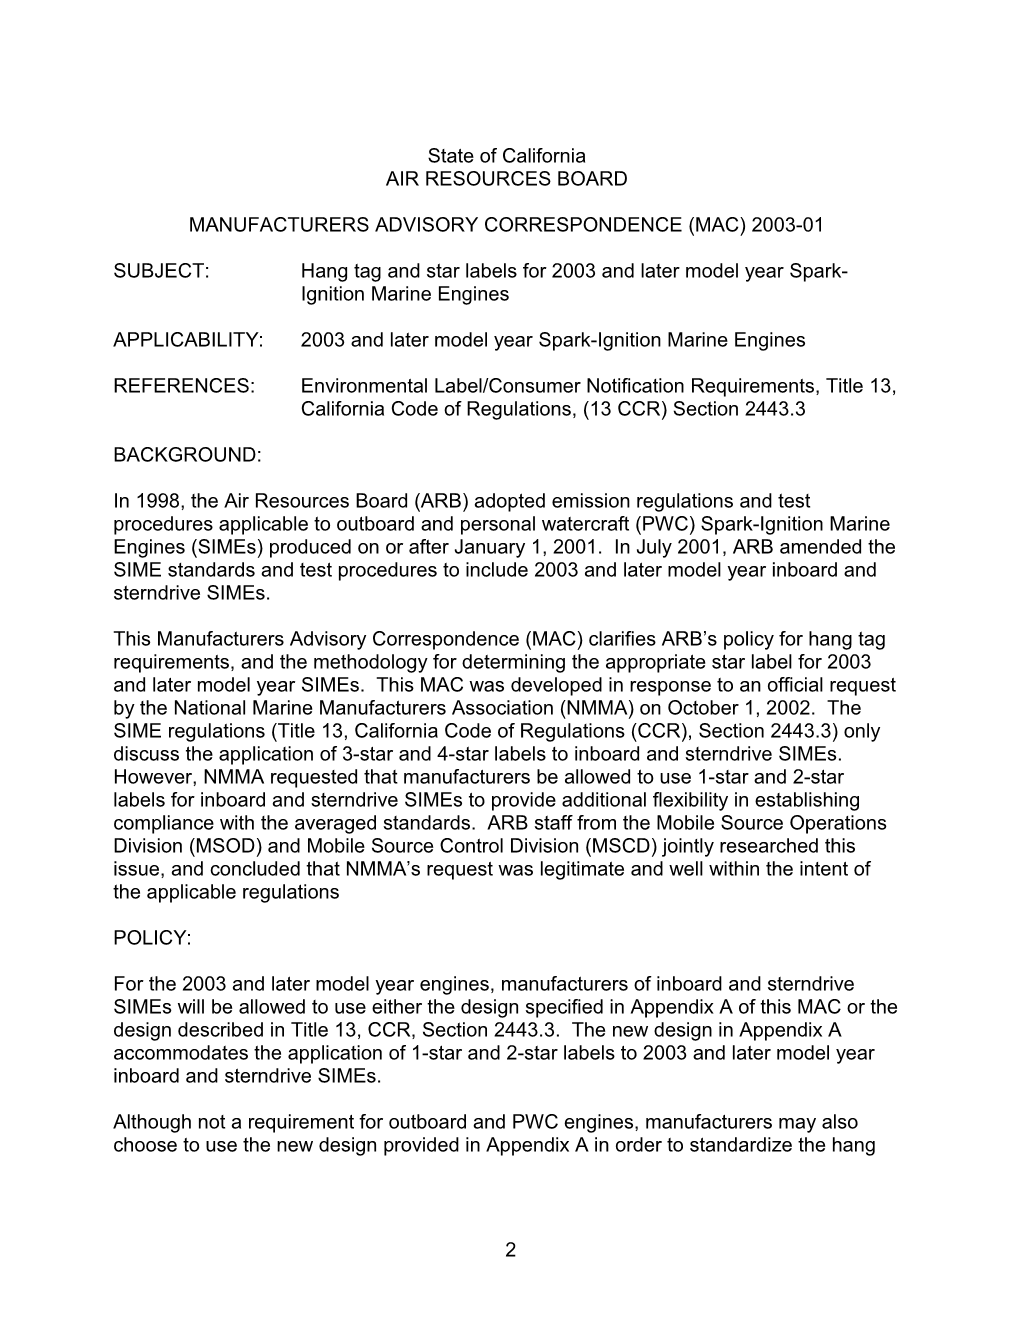 Manufacturers Advisory Correspondence (Mac) 2003-01